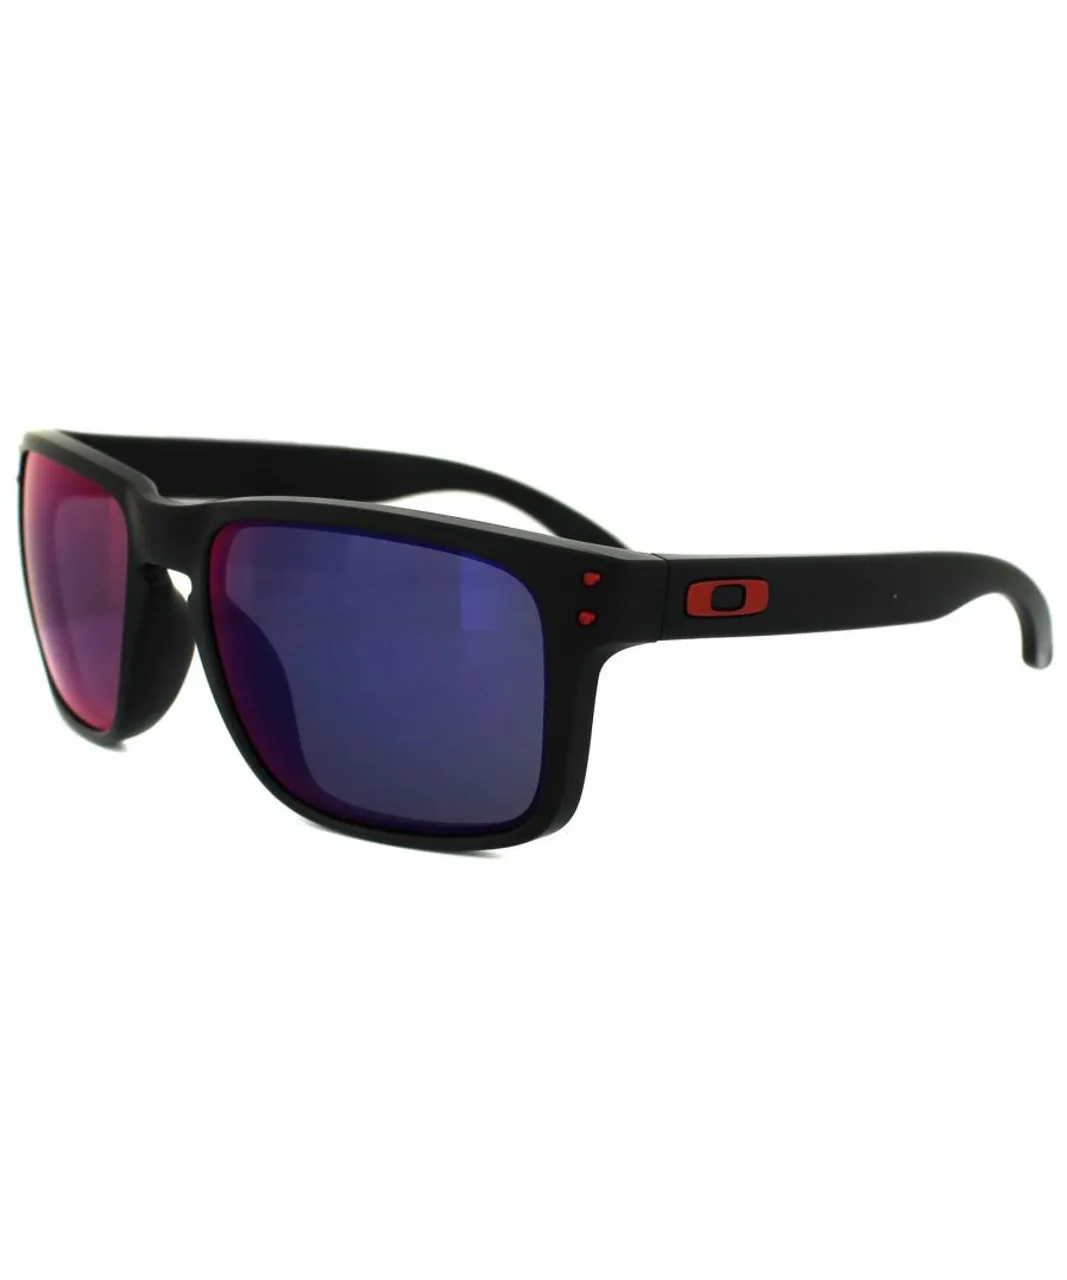 Oakley Mens Sunglasses Holbrook OO9102-36 Matt Black Positive Red Iridium - One